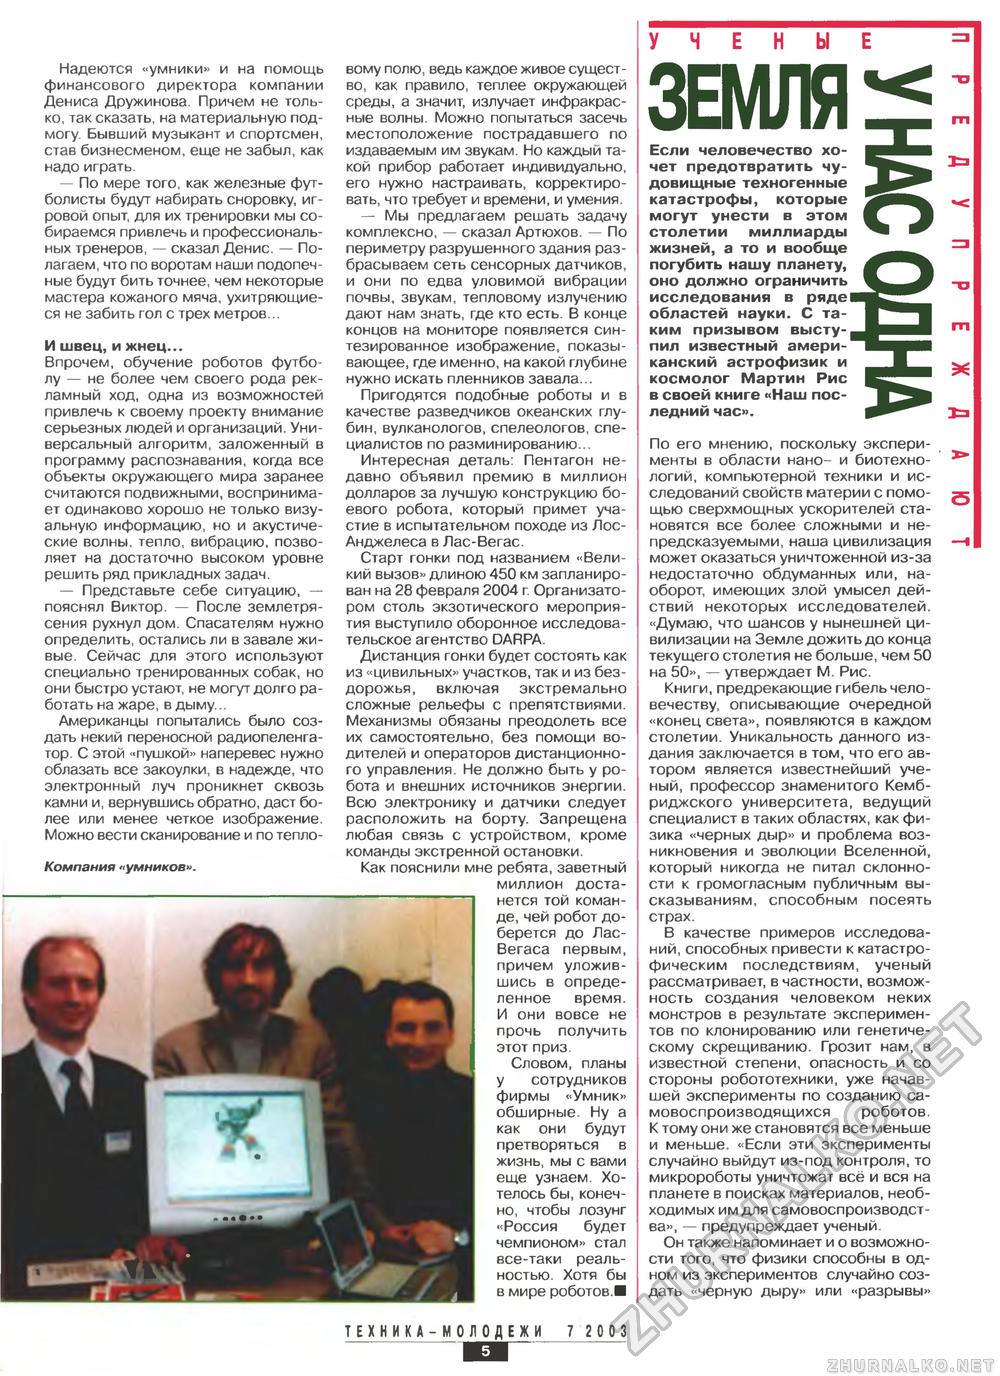 Техника - молодёжи 2003-07, страница 7